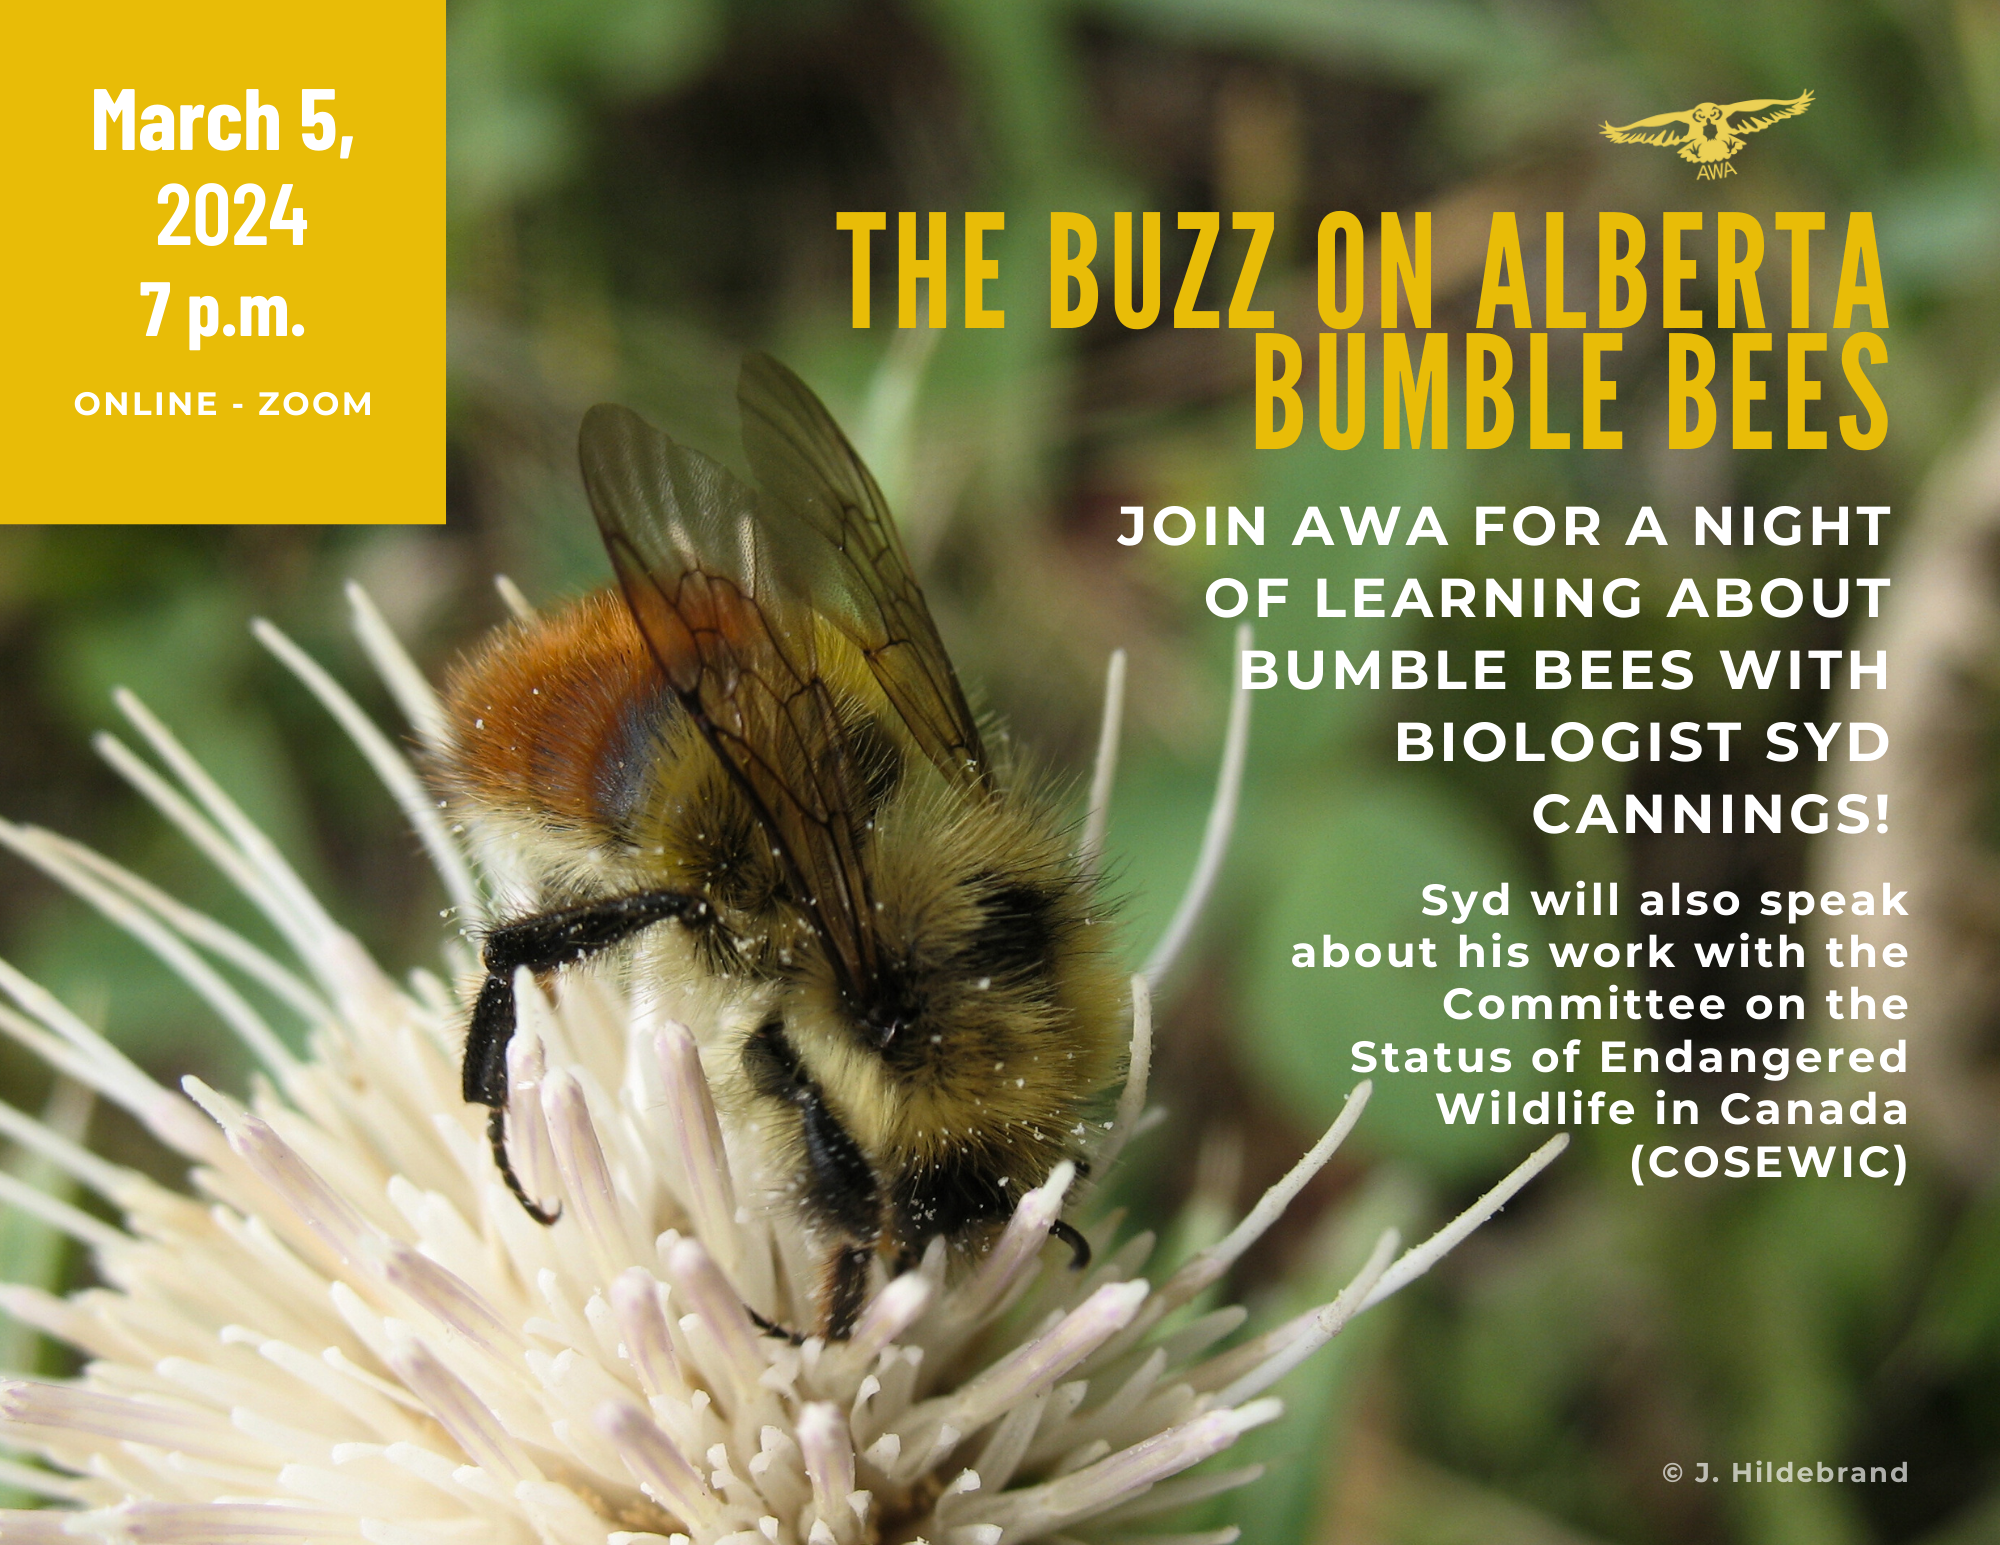 The Buzz on Alberta Bumble Bees - Alberta Wilderness Association